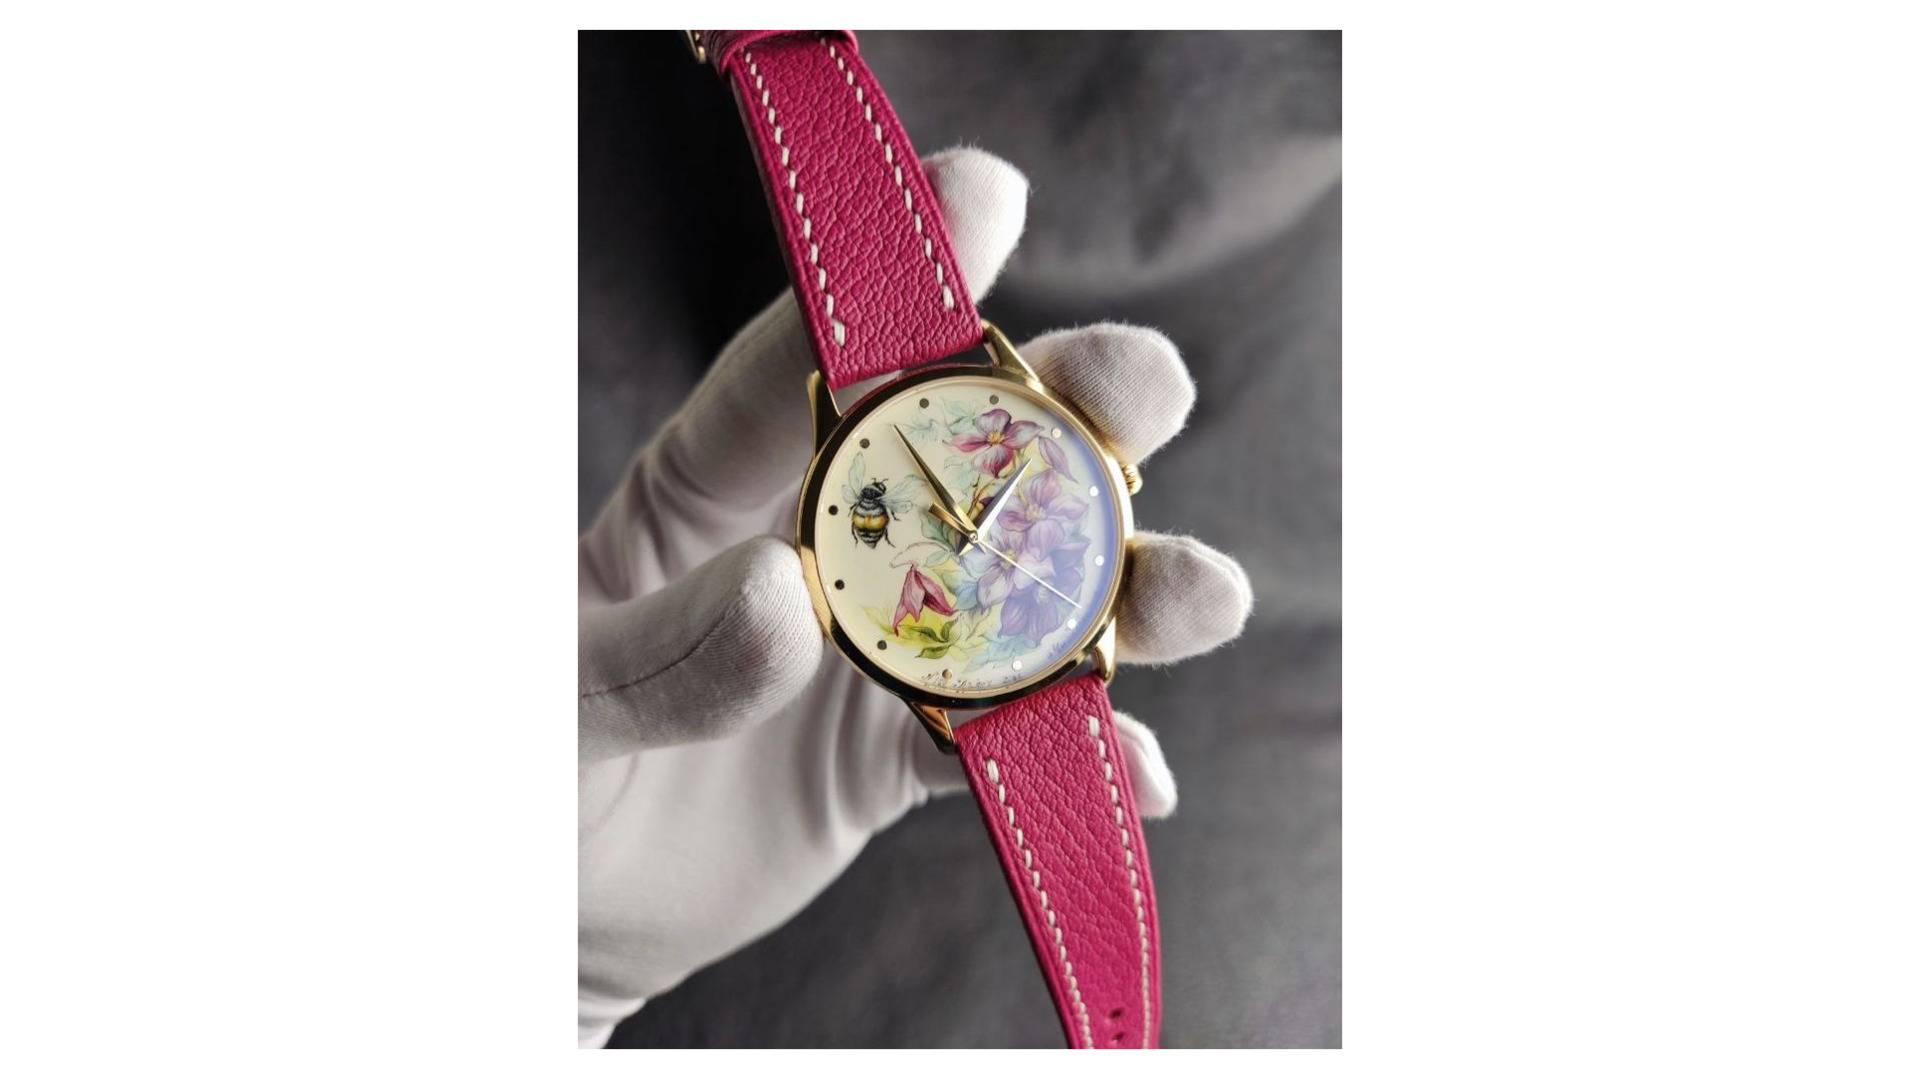 Часы наручные кварцевые Palekh Watch Полет шмеля 4,2 см, фуксия, сталь нержавеющая, кожа натуральная